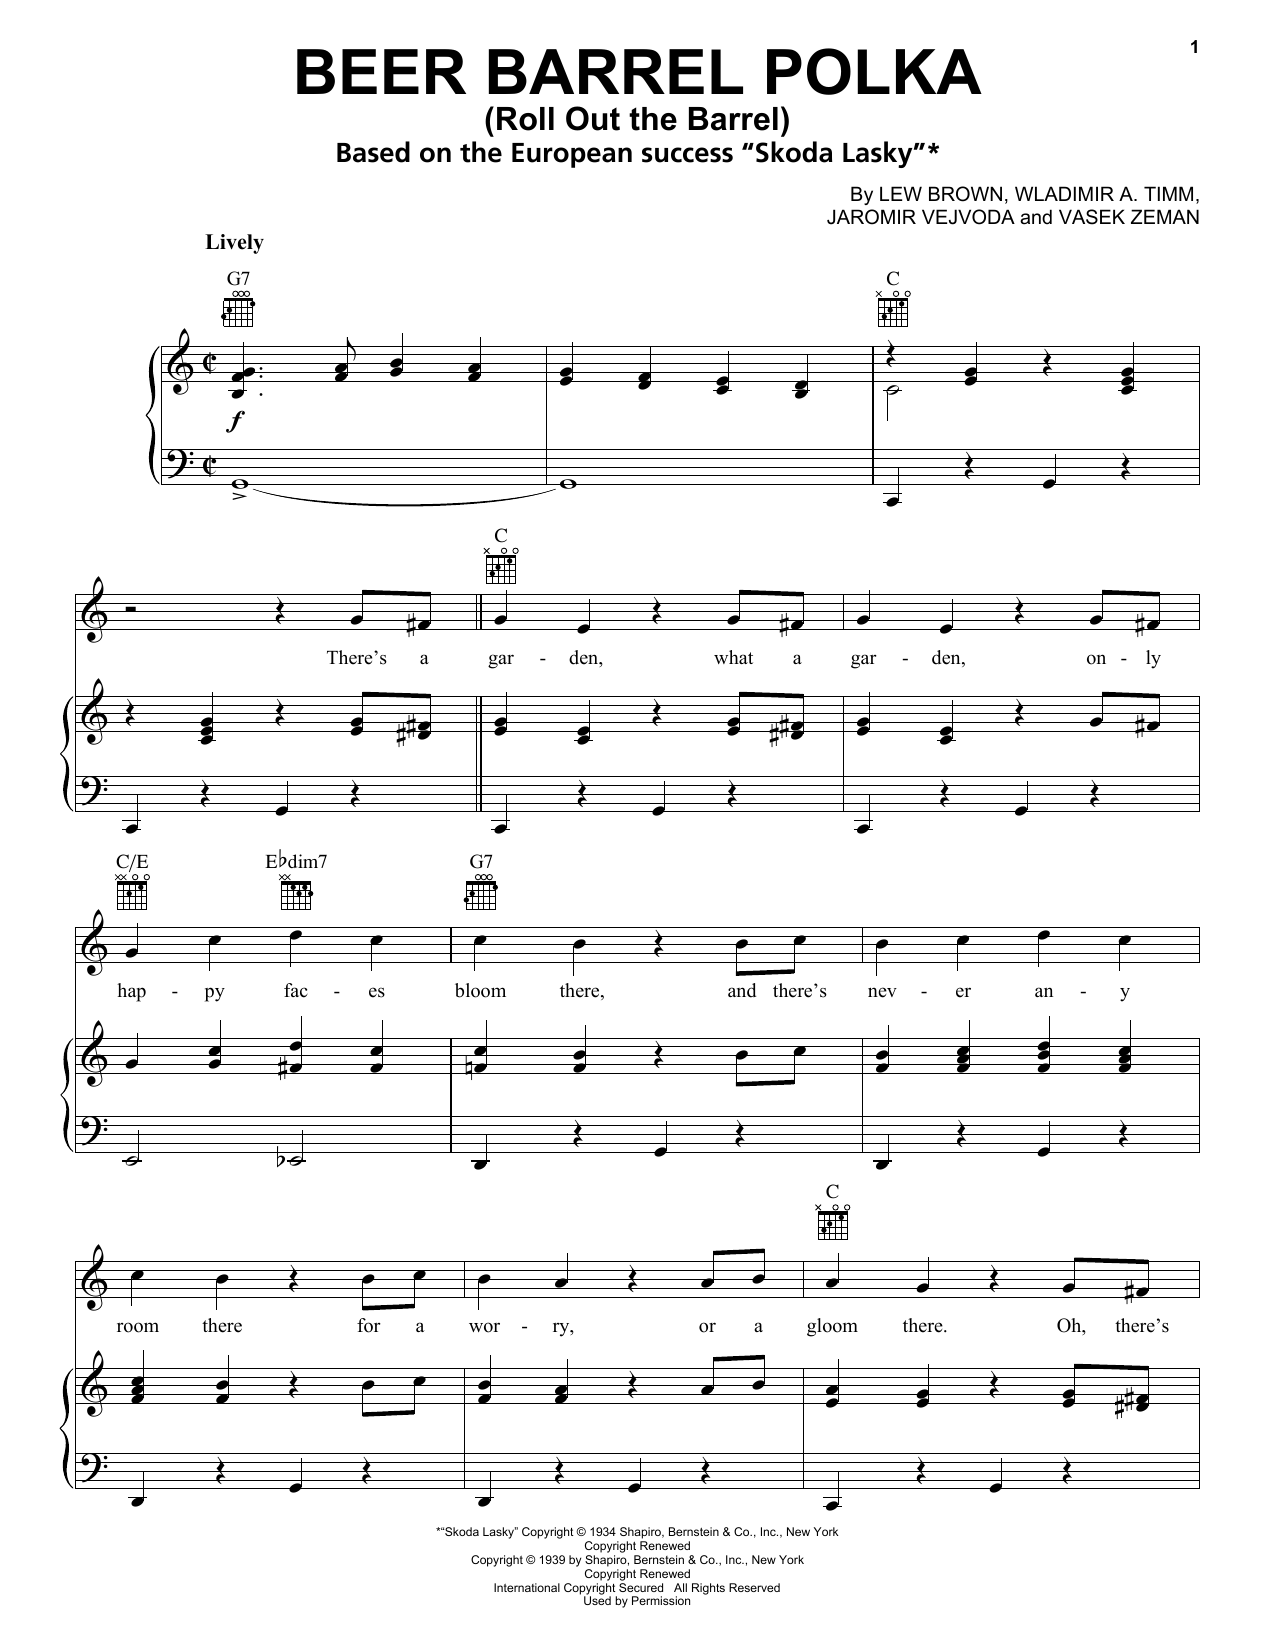 Bobby Vinton Beer Barrel Polka (Roll Out The Barrel) Sheet Music Notes & Chords for Melody Line, Lyrics & Chords - Download or Print PDF